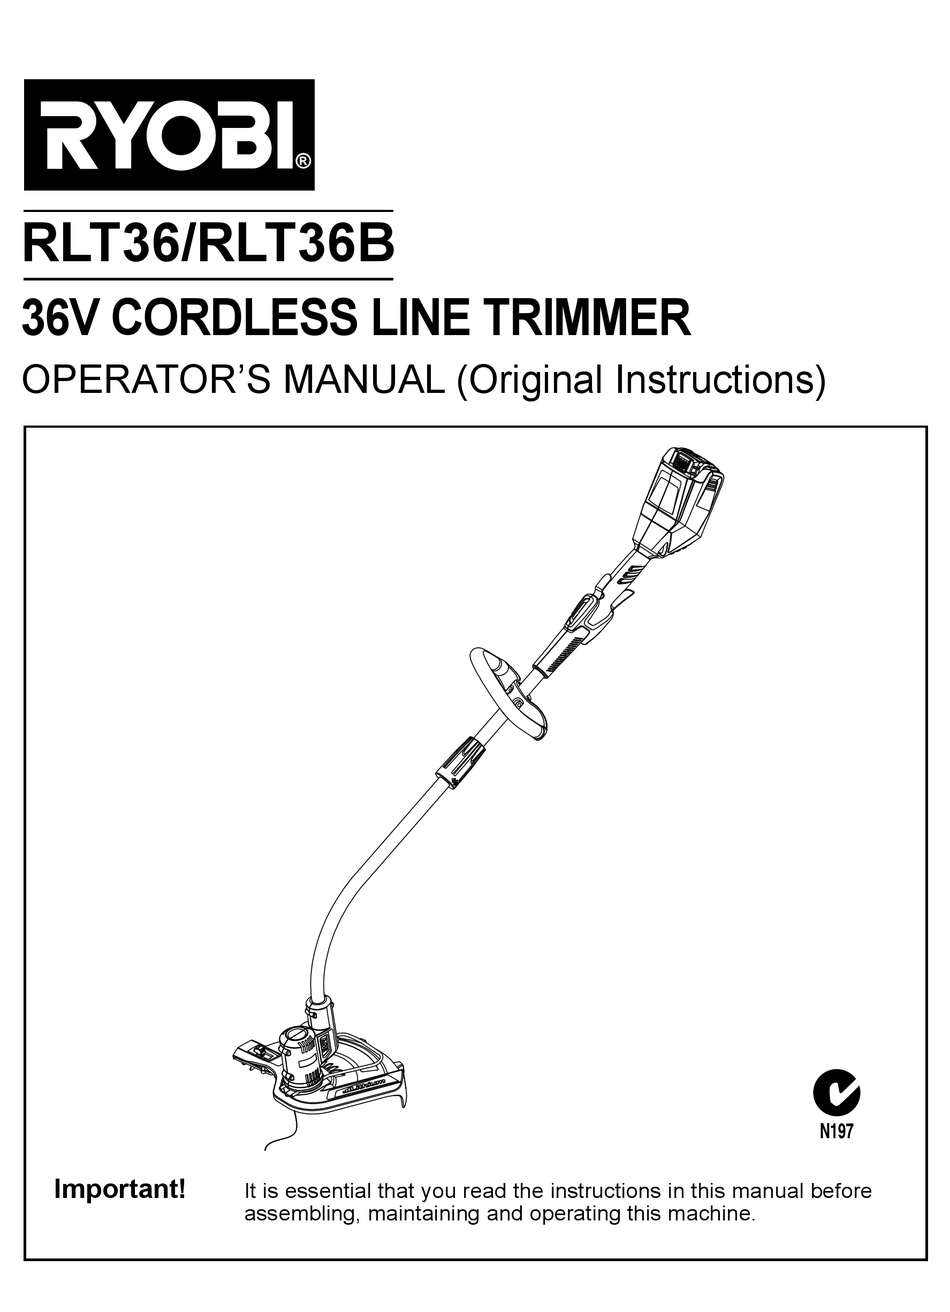 ryobi cordless line trimmer 36v